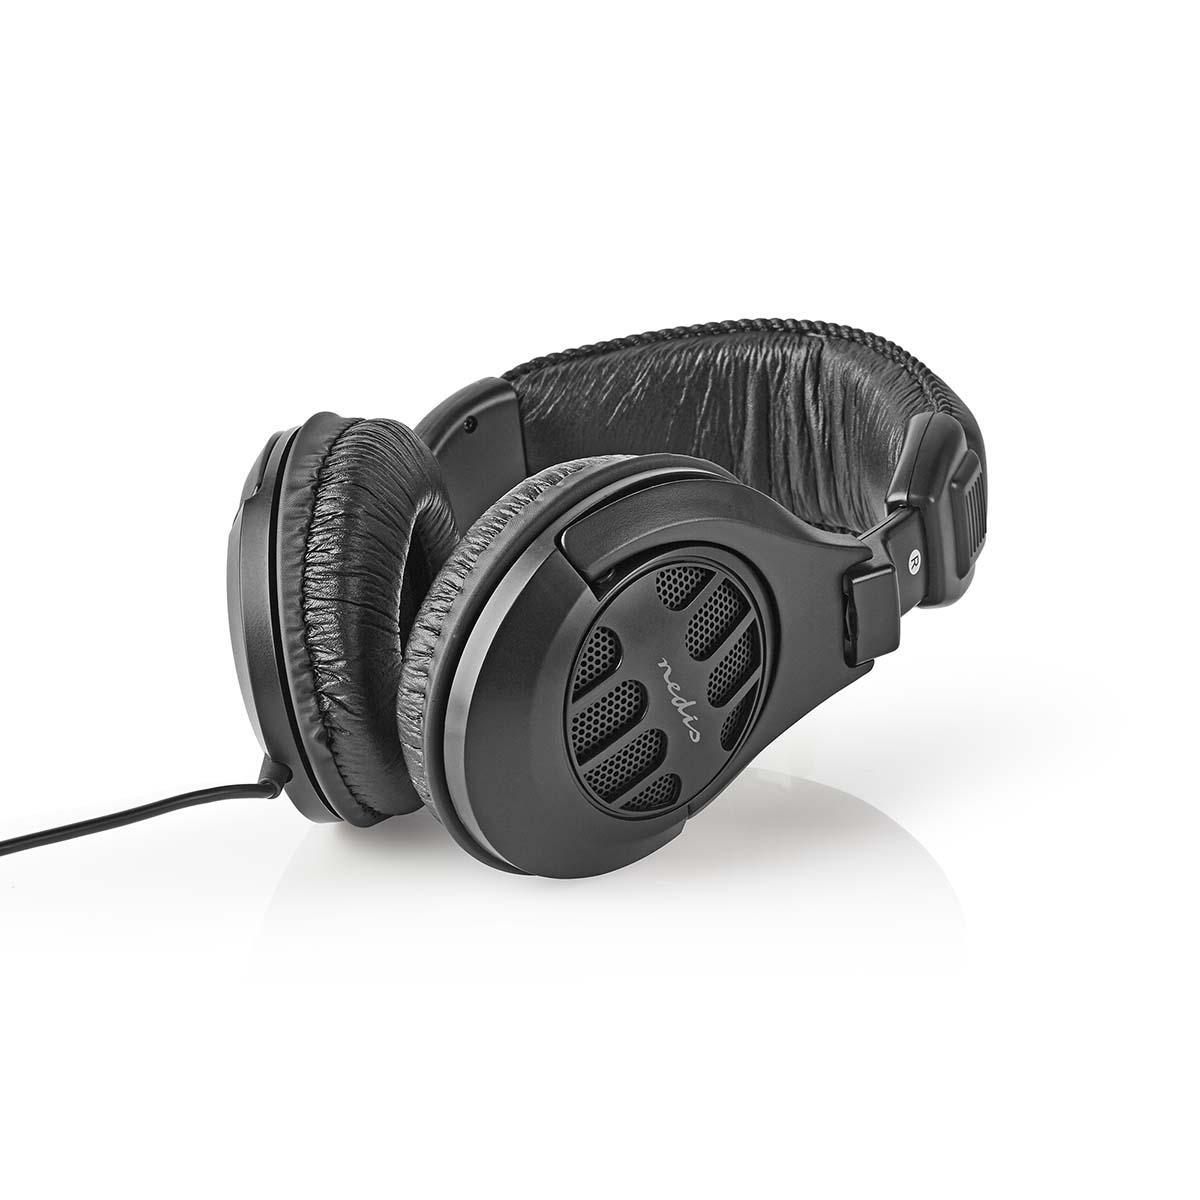 NEDIS HPWD3200BK, Over-ear Schwarz Kopfhörer